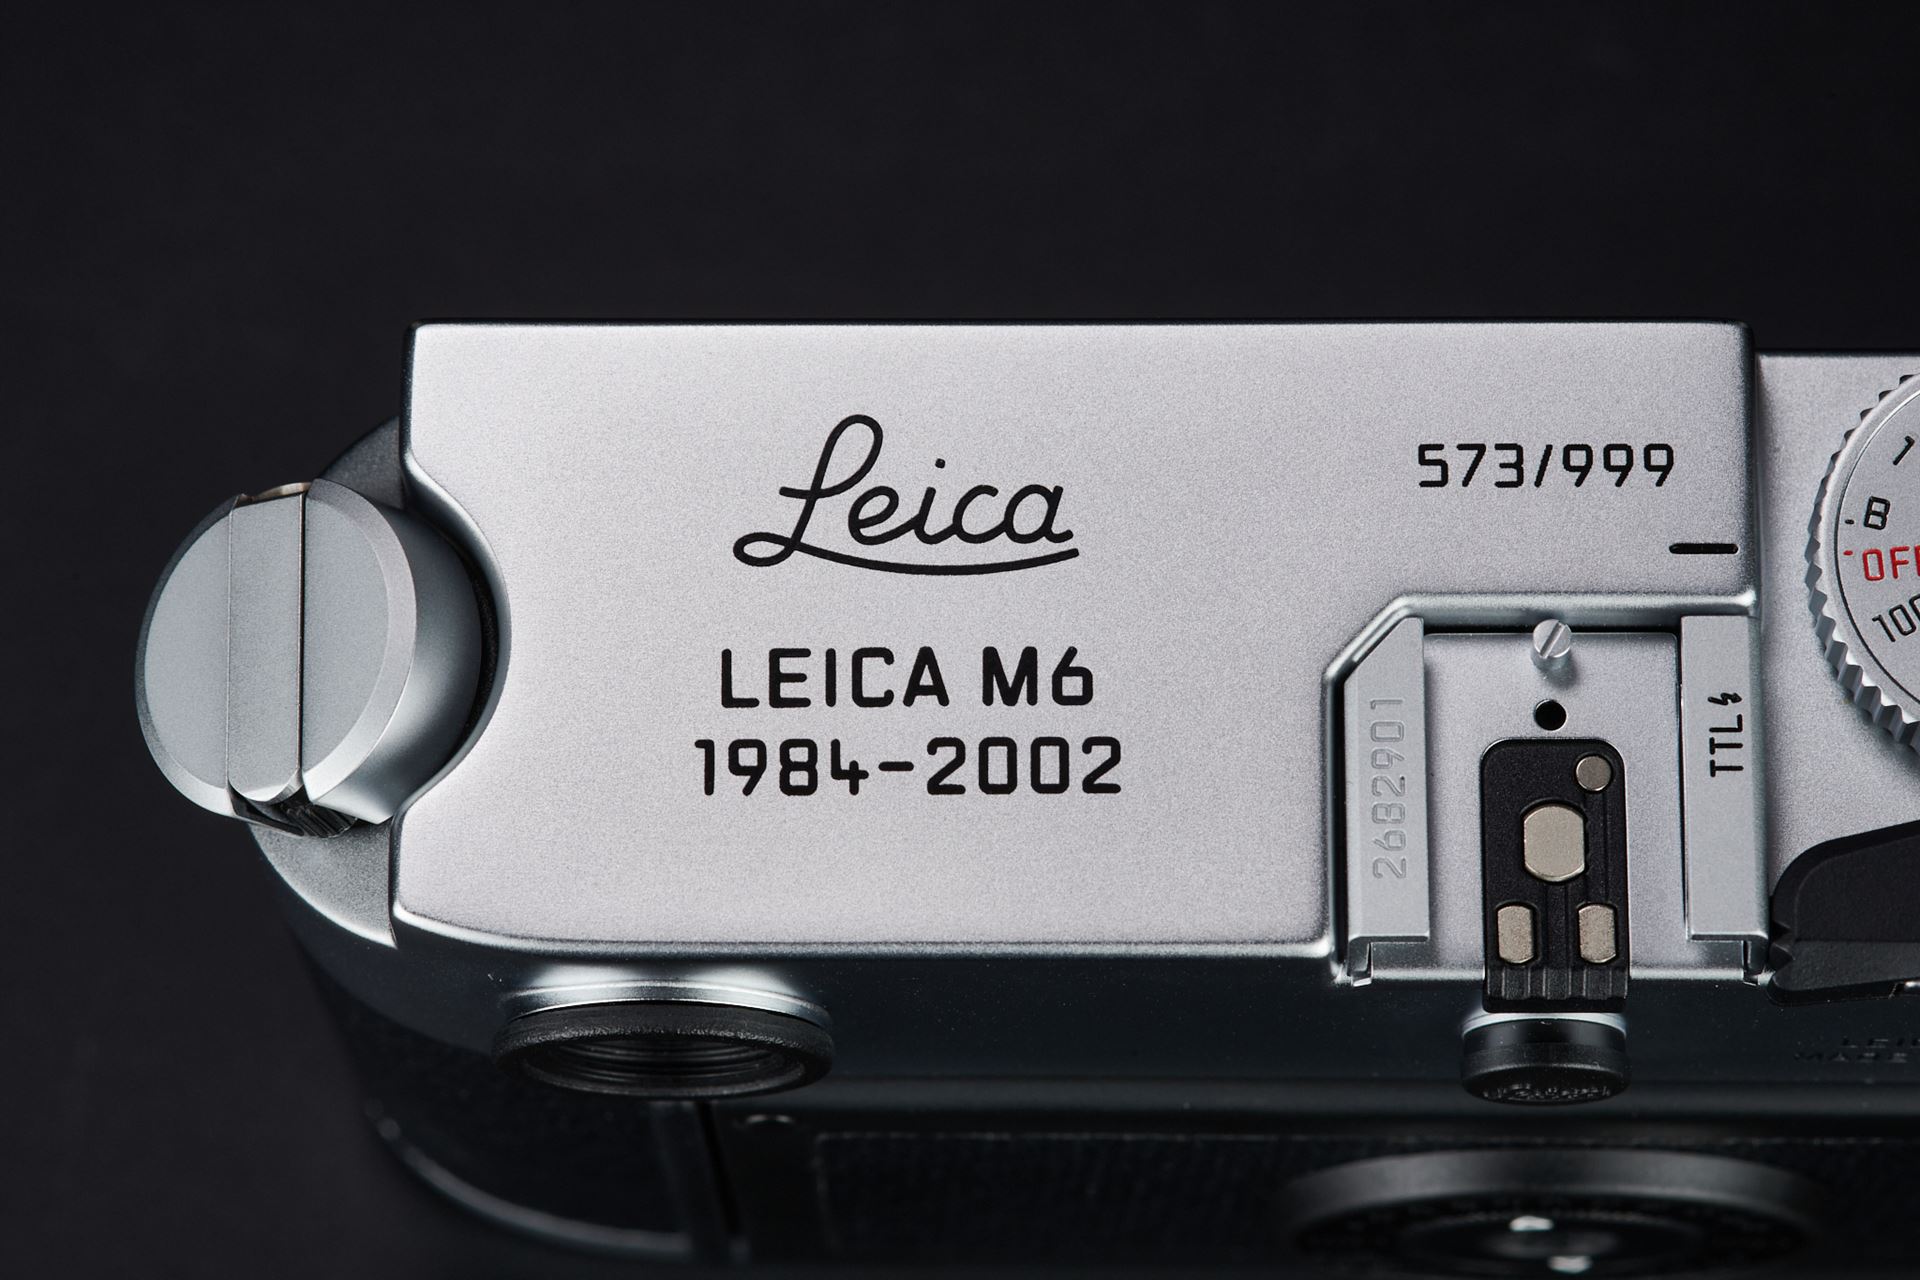 Picture of Leica M6 TTL 0.85 "Die Letzten 999 M6" Chrome (573/999)